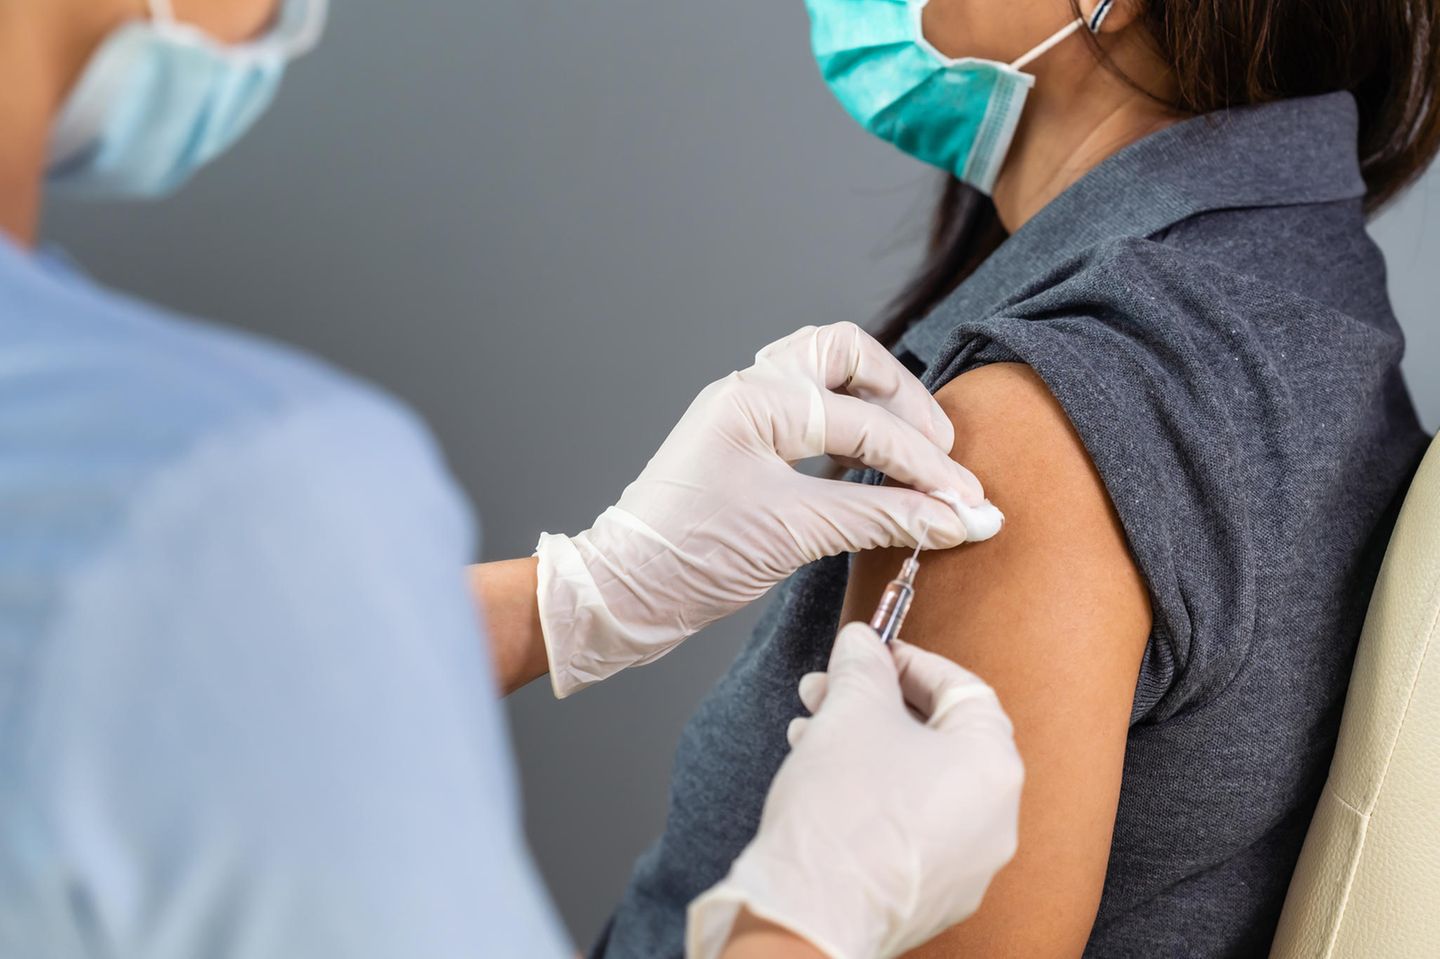 Millionärspaar erschleicht sich Impfung gegen Corona: Frau wird geimpft